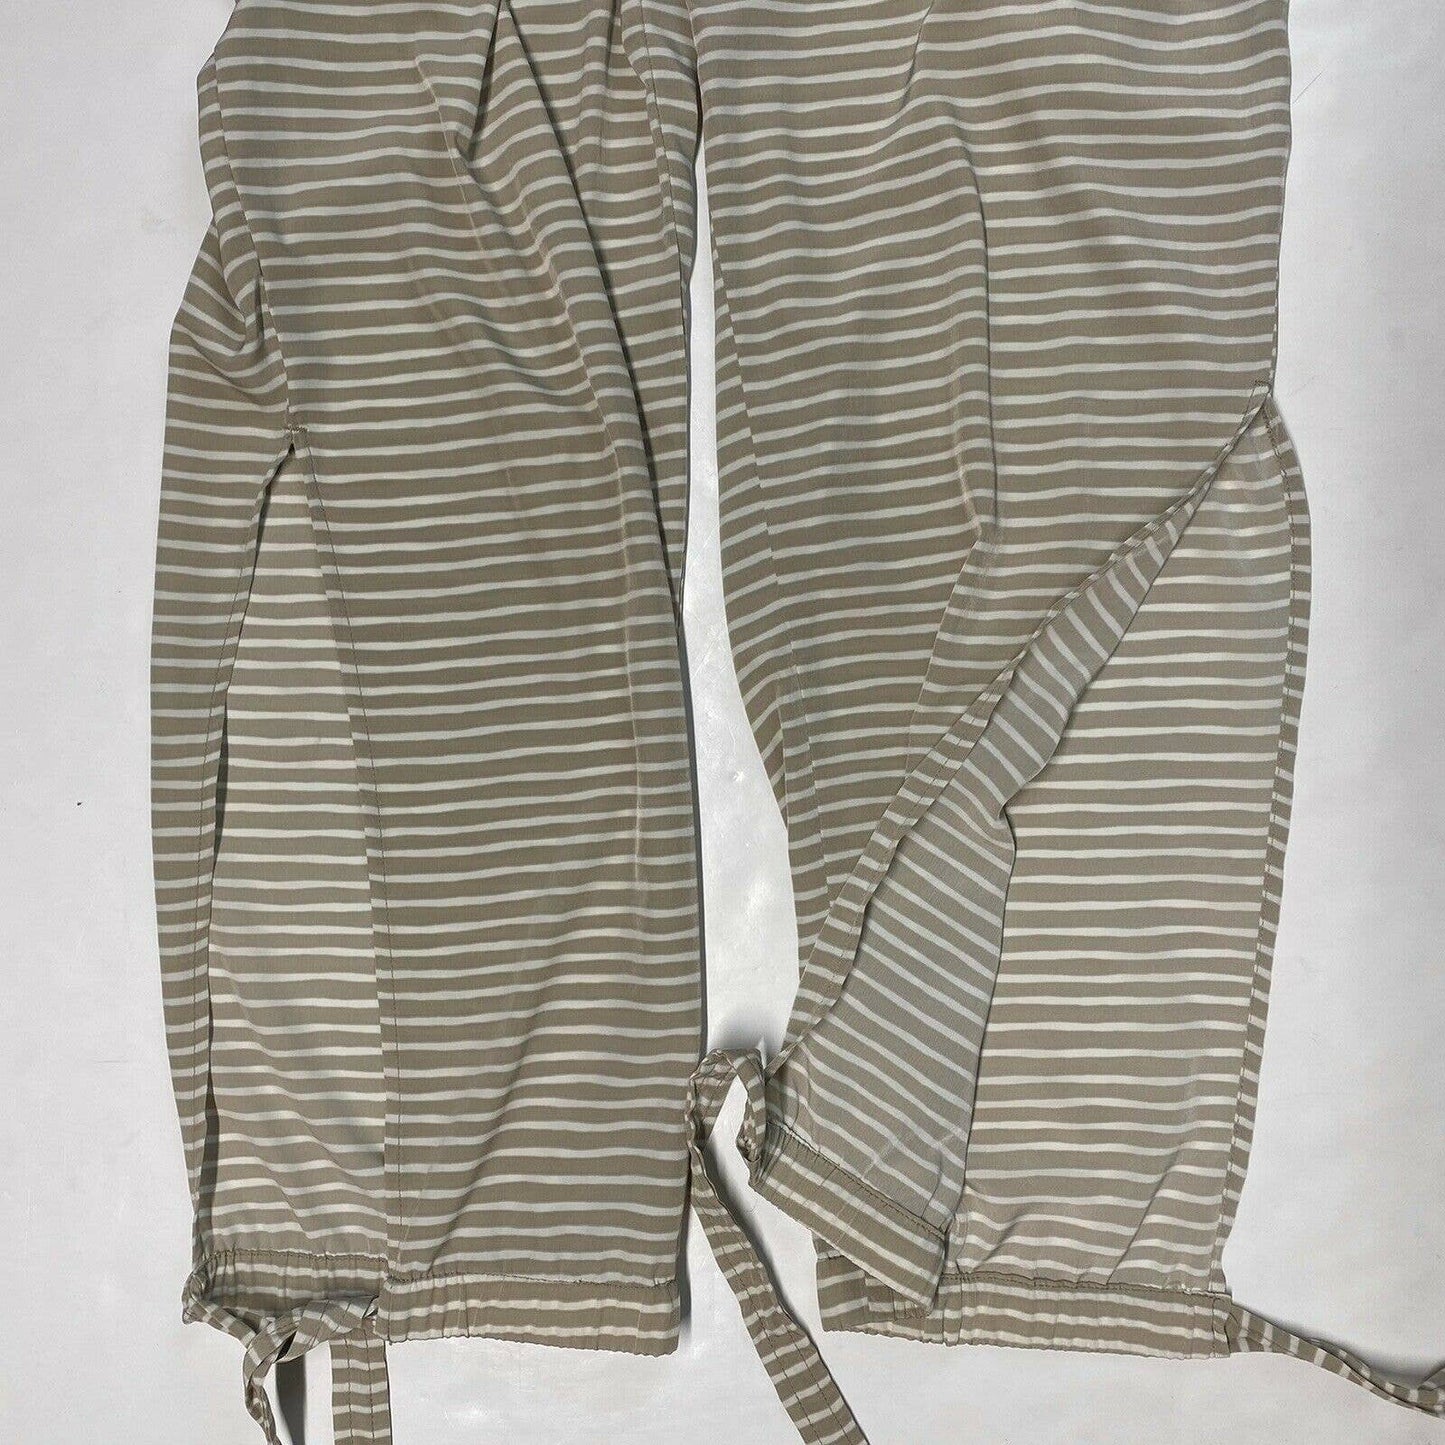 Black Label Chicos Striped Ankle Tie Pants Sz 2 (US 12) Beige Elastic Side Zip